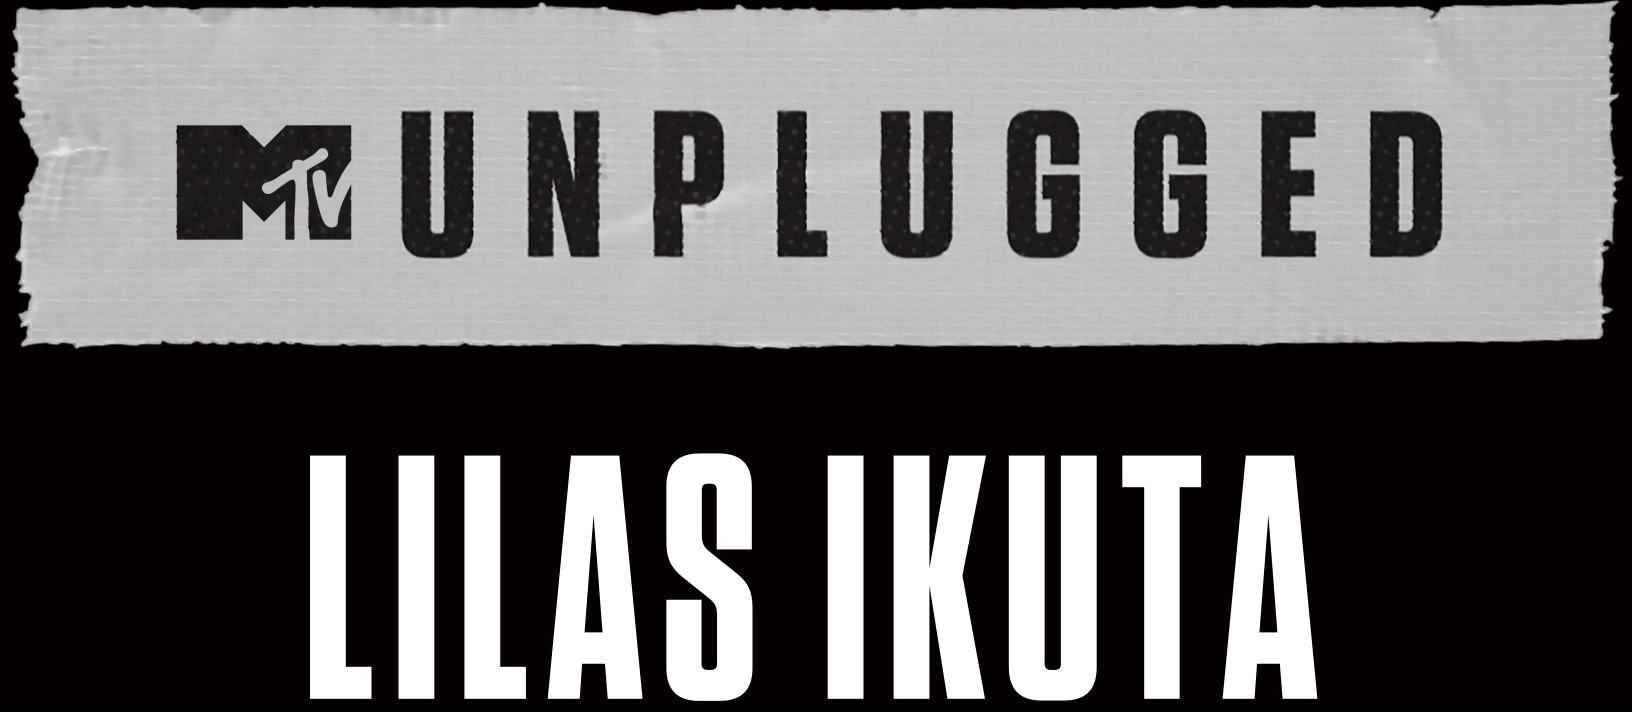 MTV Unplugged: Lilas Ikuta ロゴ画像